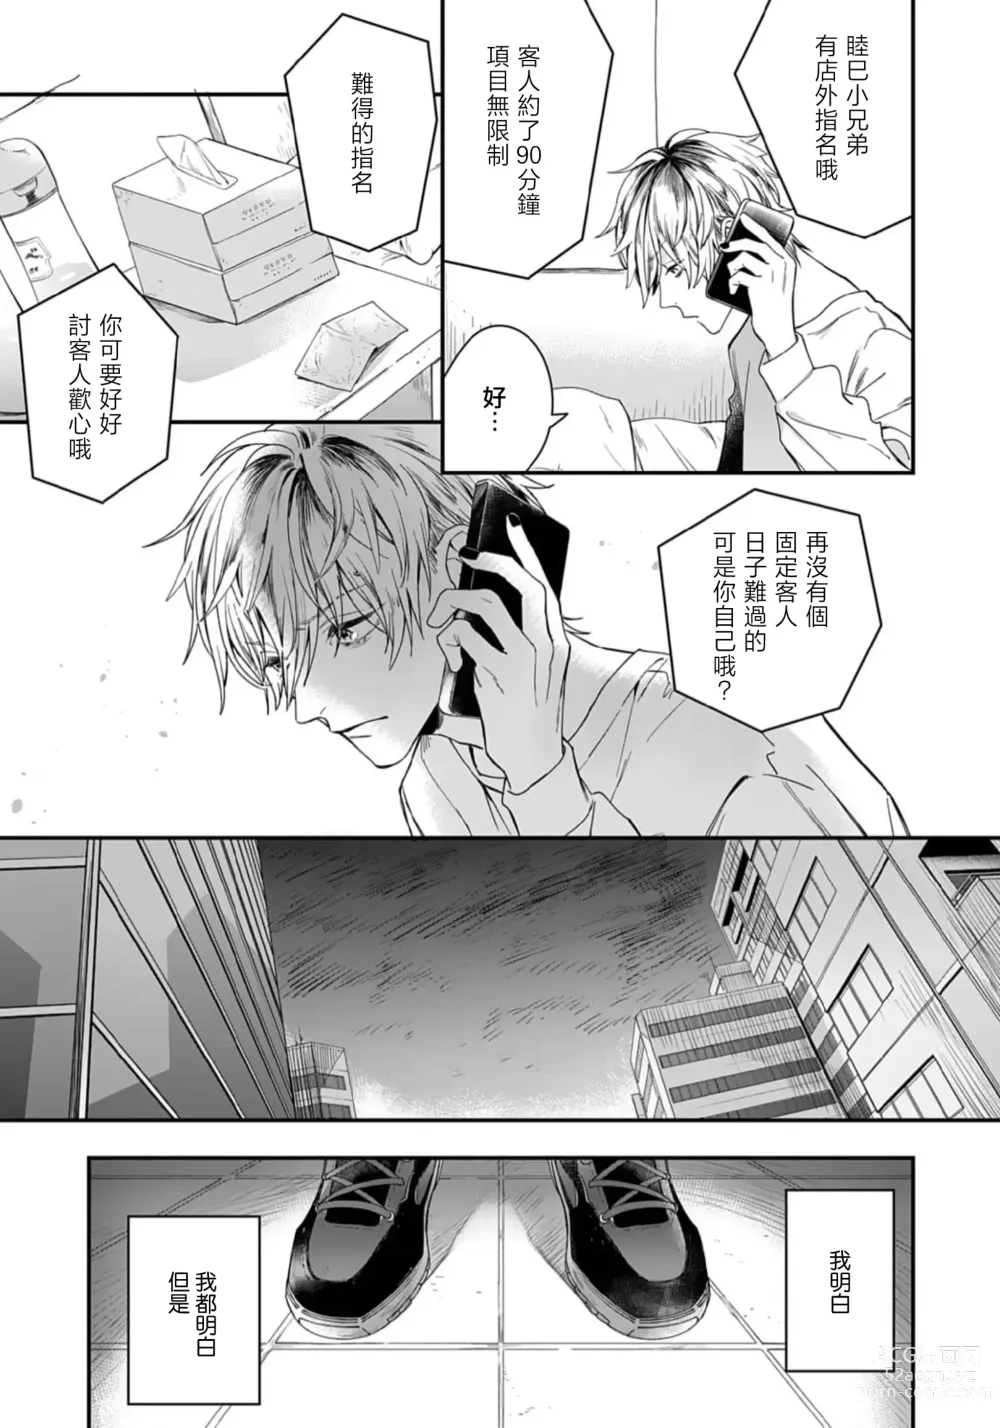 Page 9 of manga 他的声音在我听来完全就是爱之歌 1-3